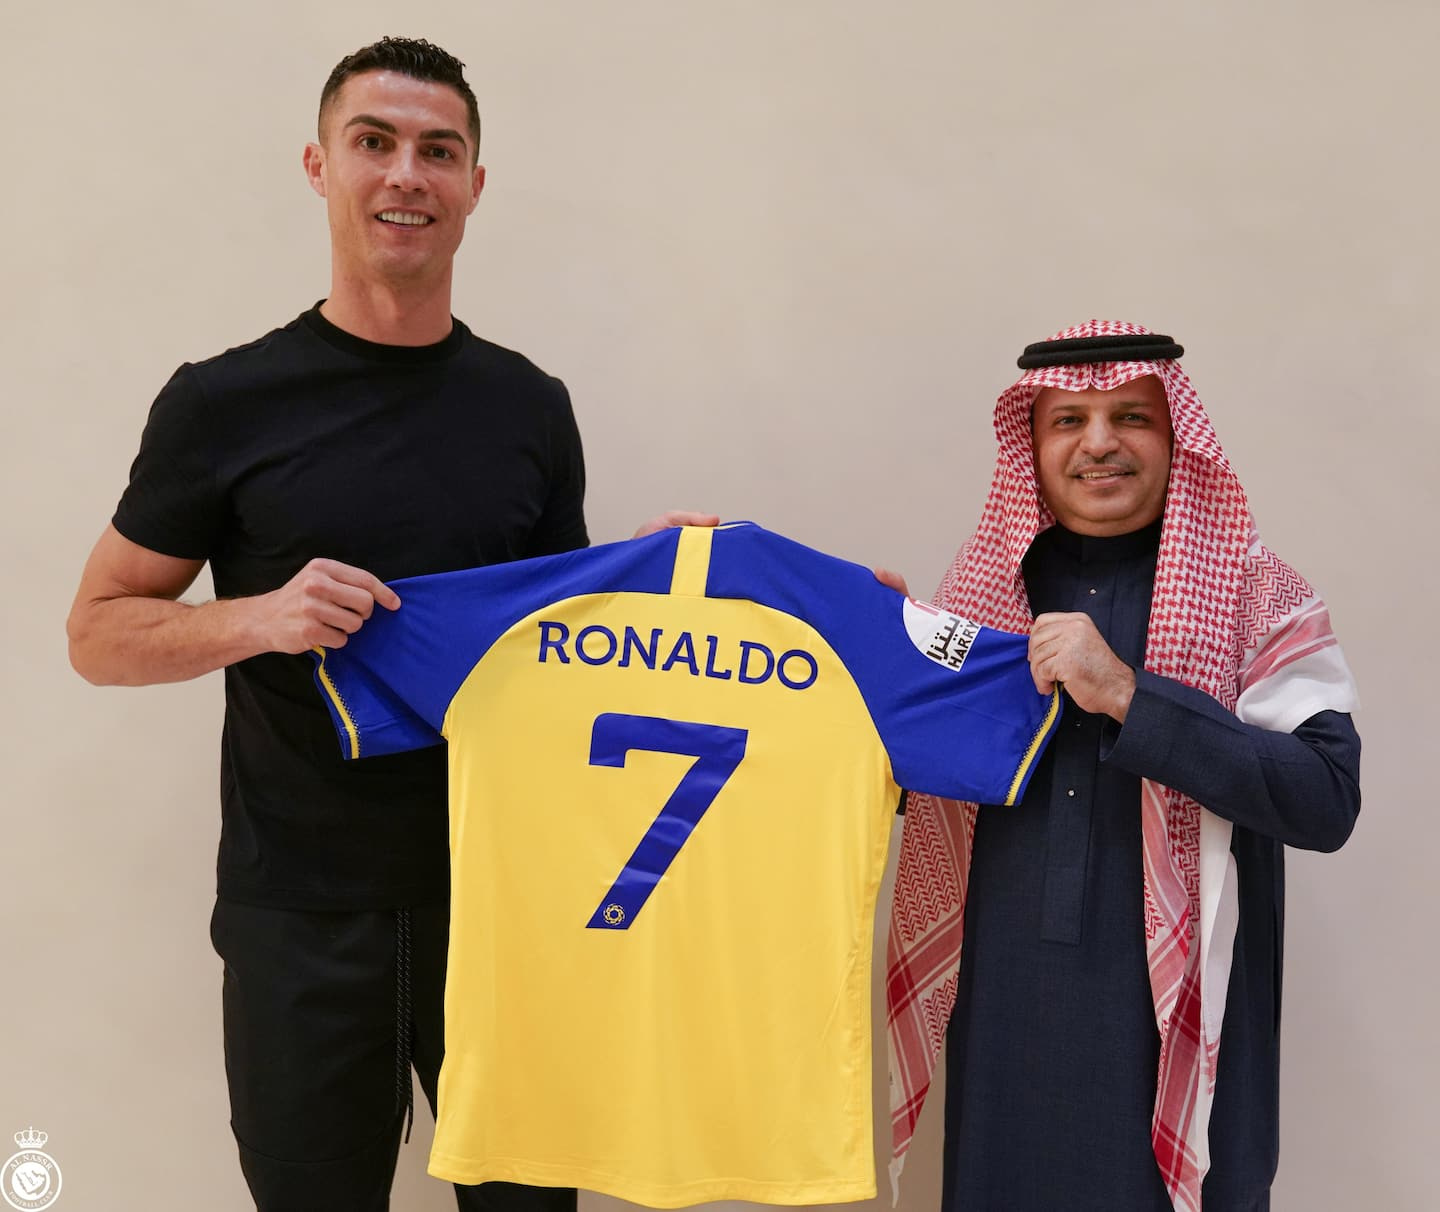 Ronaldo agrees with a Saudi club